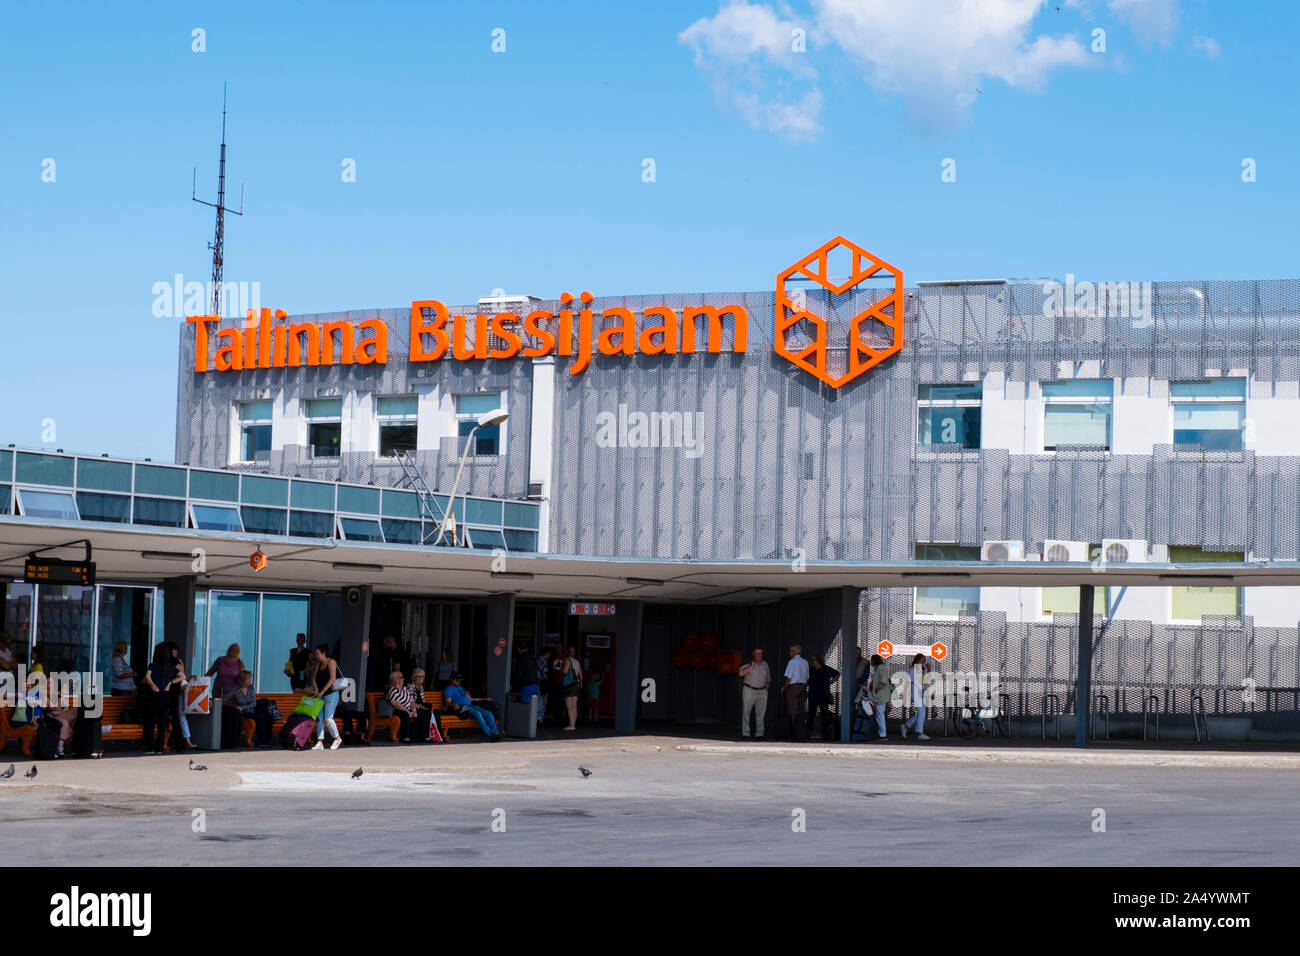 Bussijaam, bus station, Tallinn, Estonia Stock Photo - Alamy